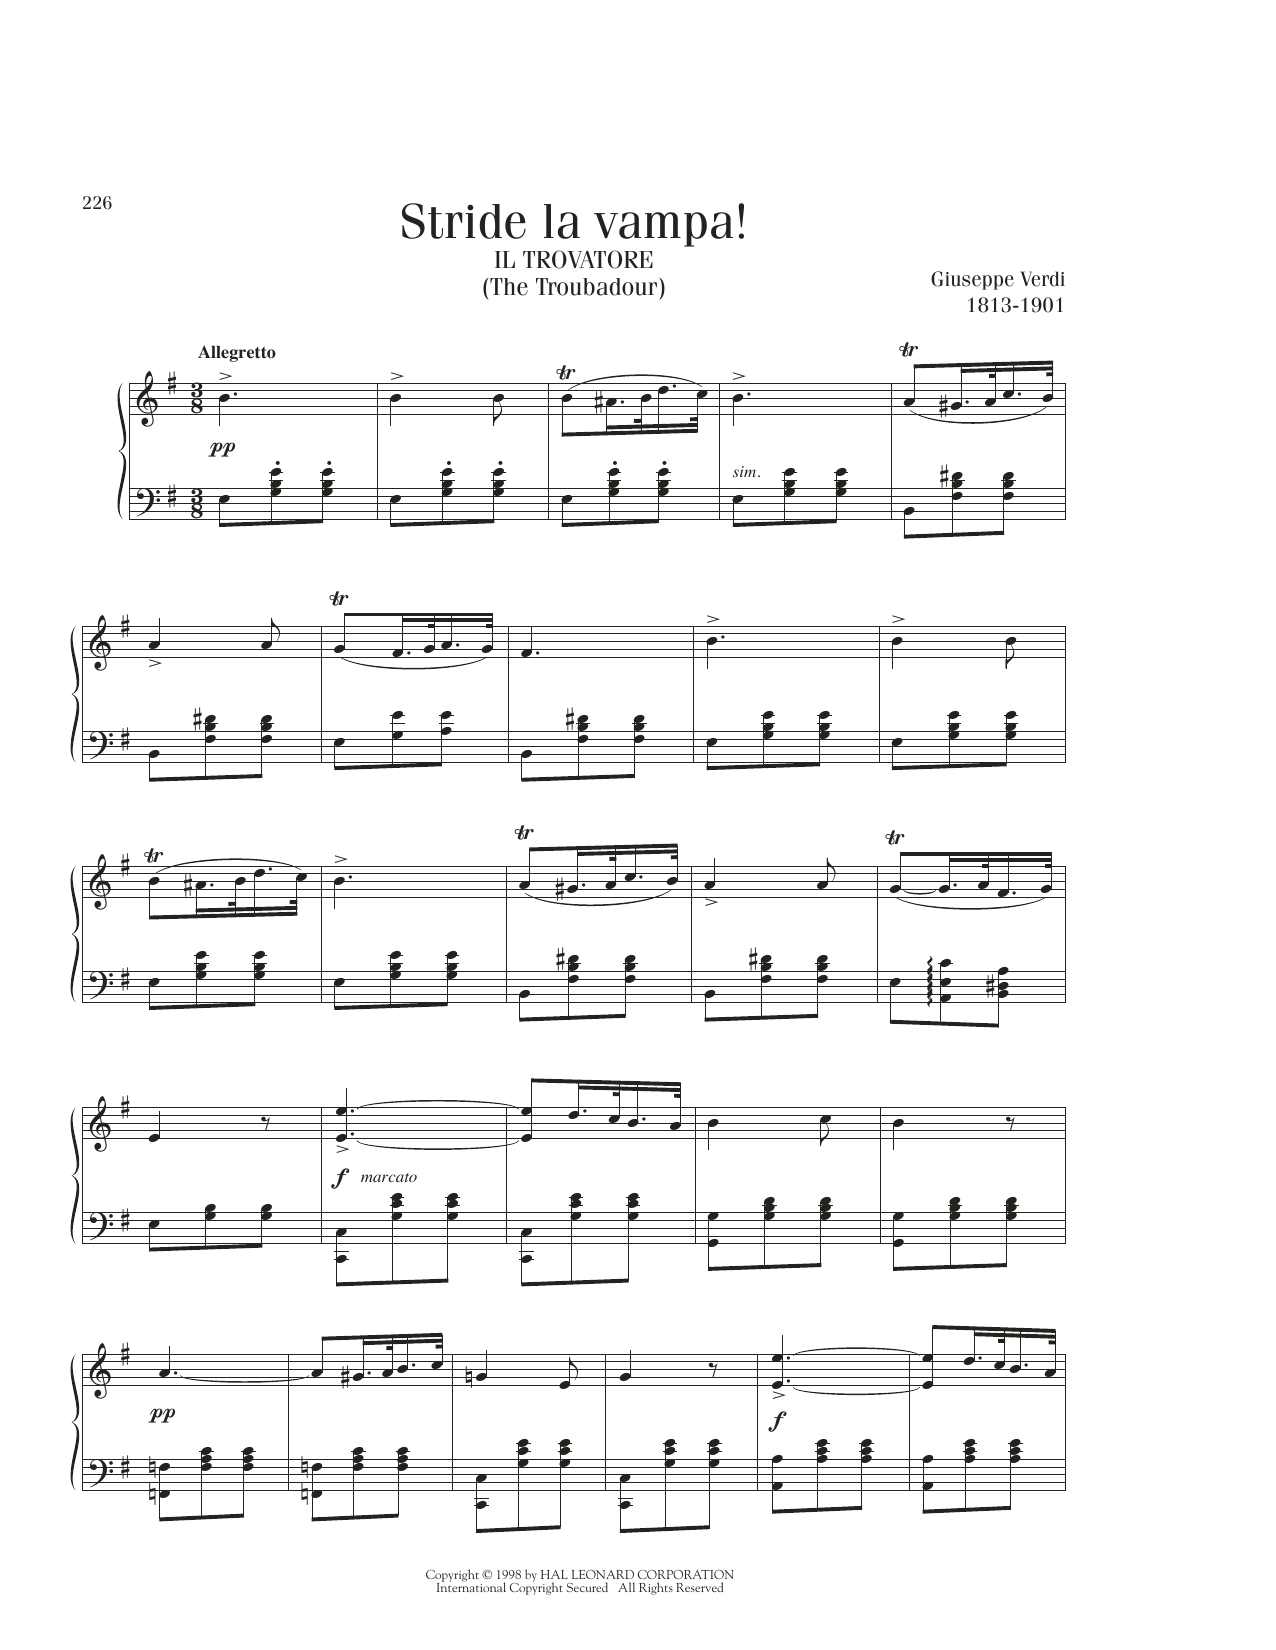 Giuseppe Verdi Stride La Vampa sheet music notes printable PDF score